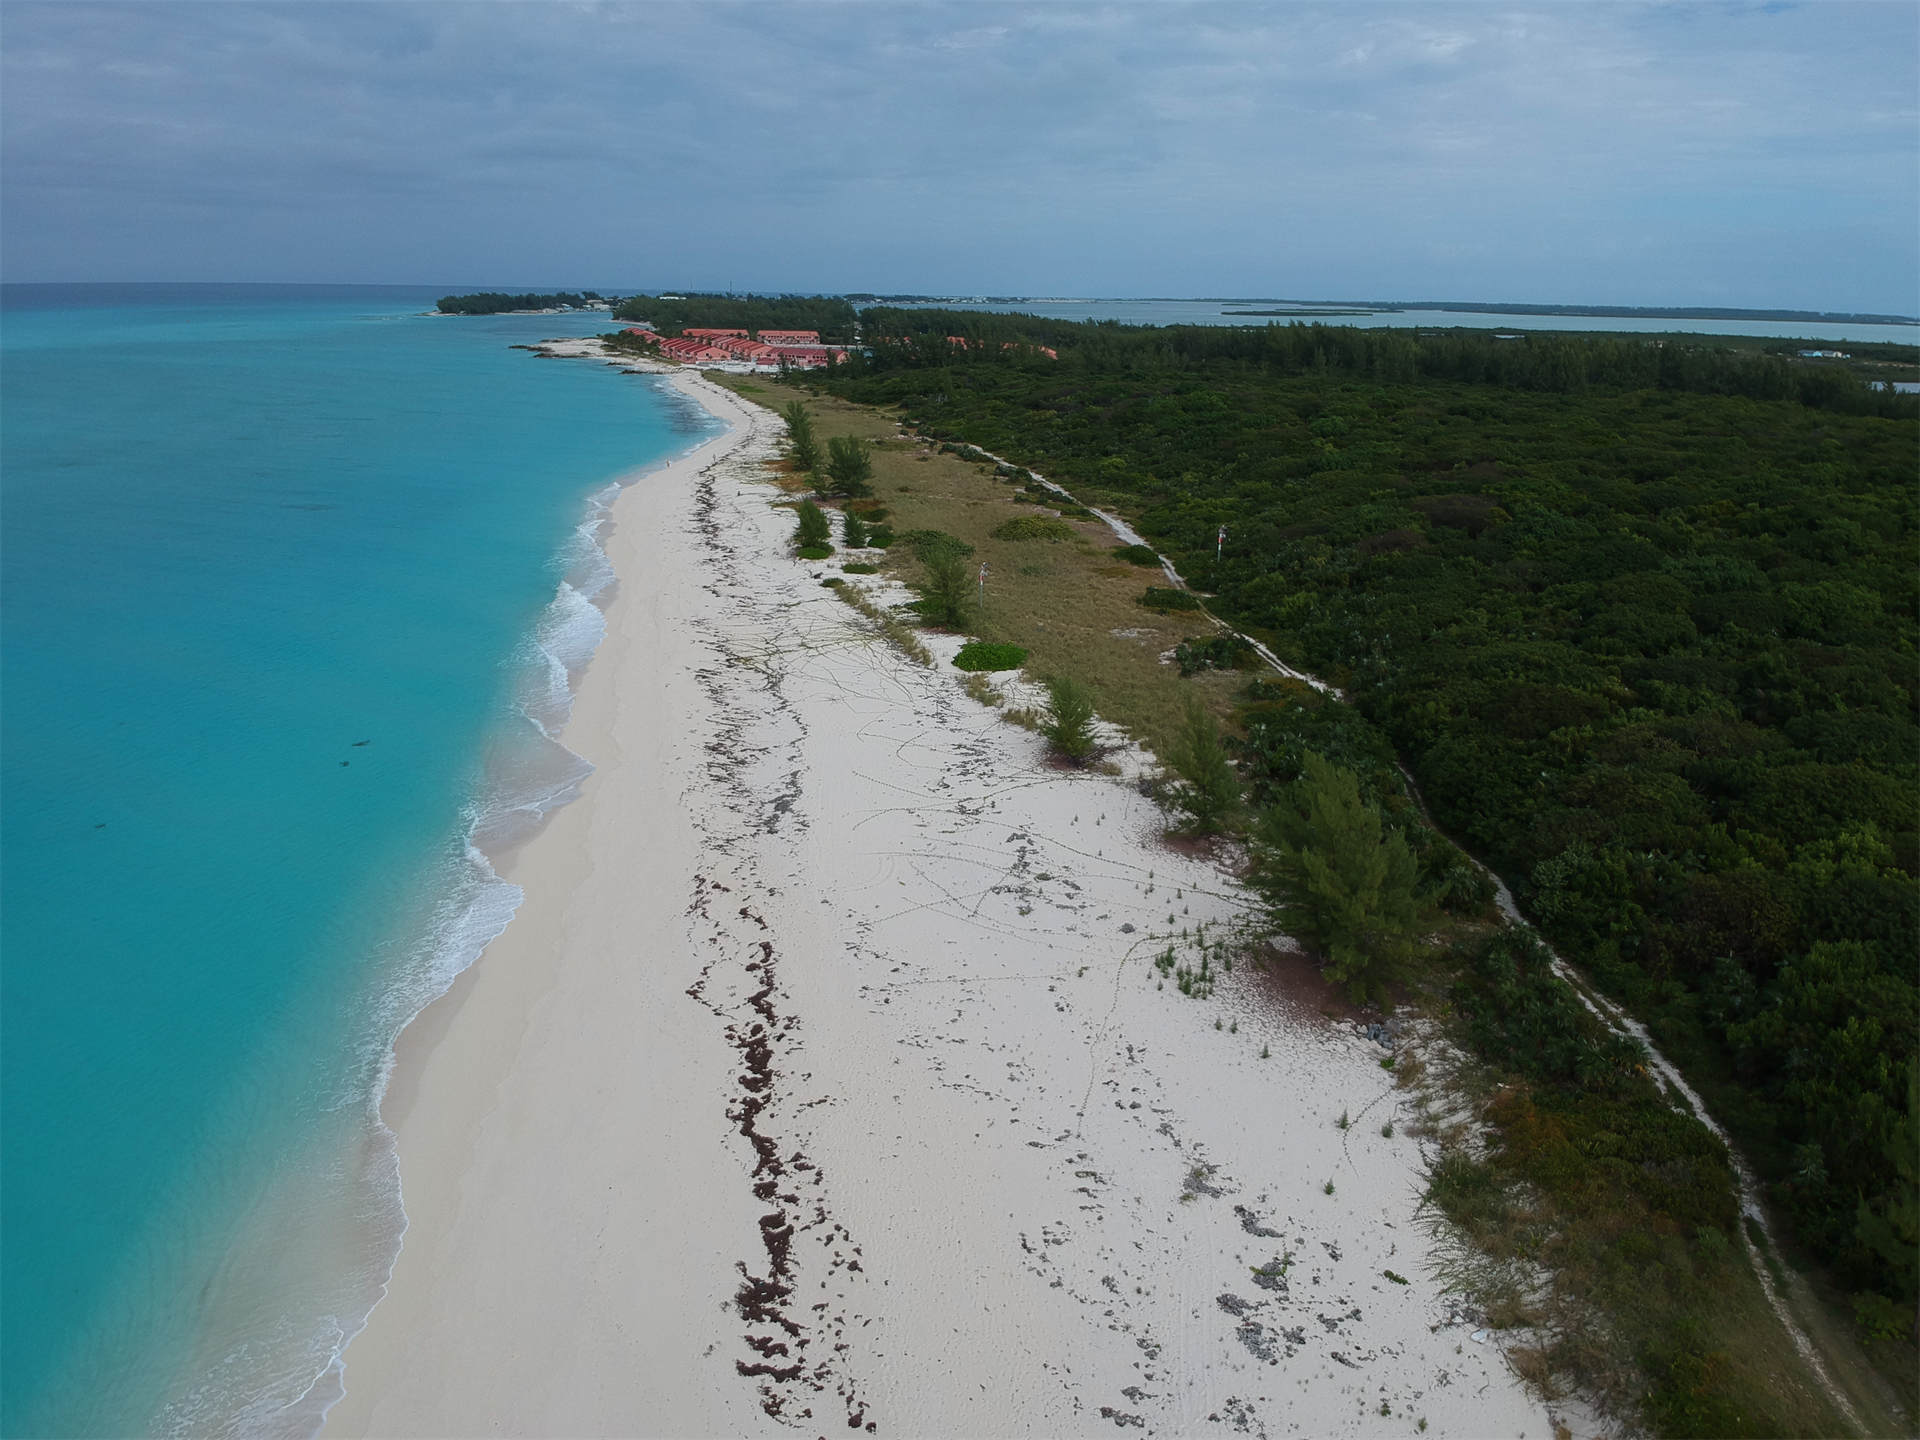 Land / Vacant Lot for Sale at South Bimini, Bimini Bahamas